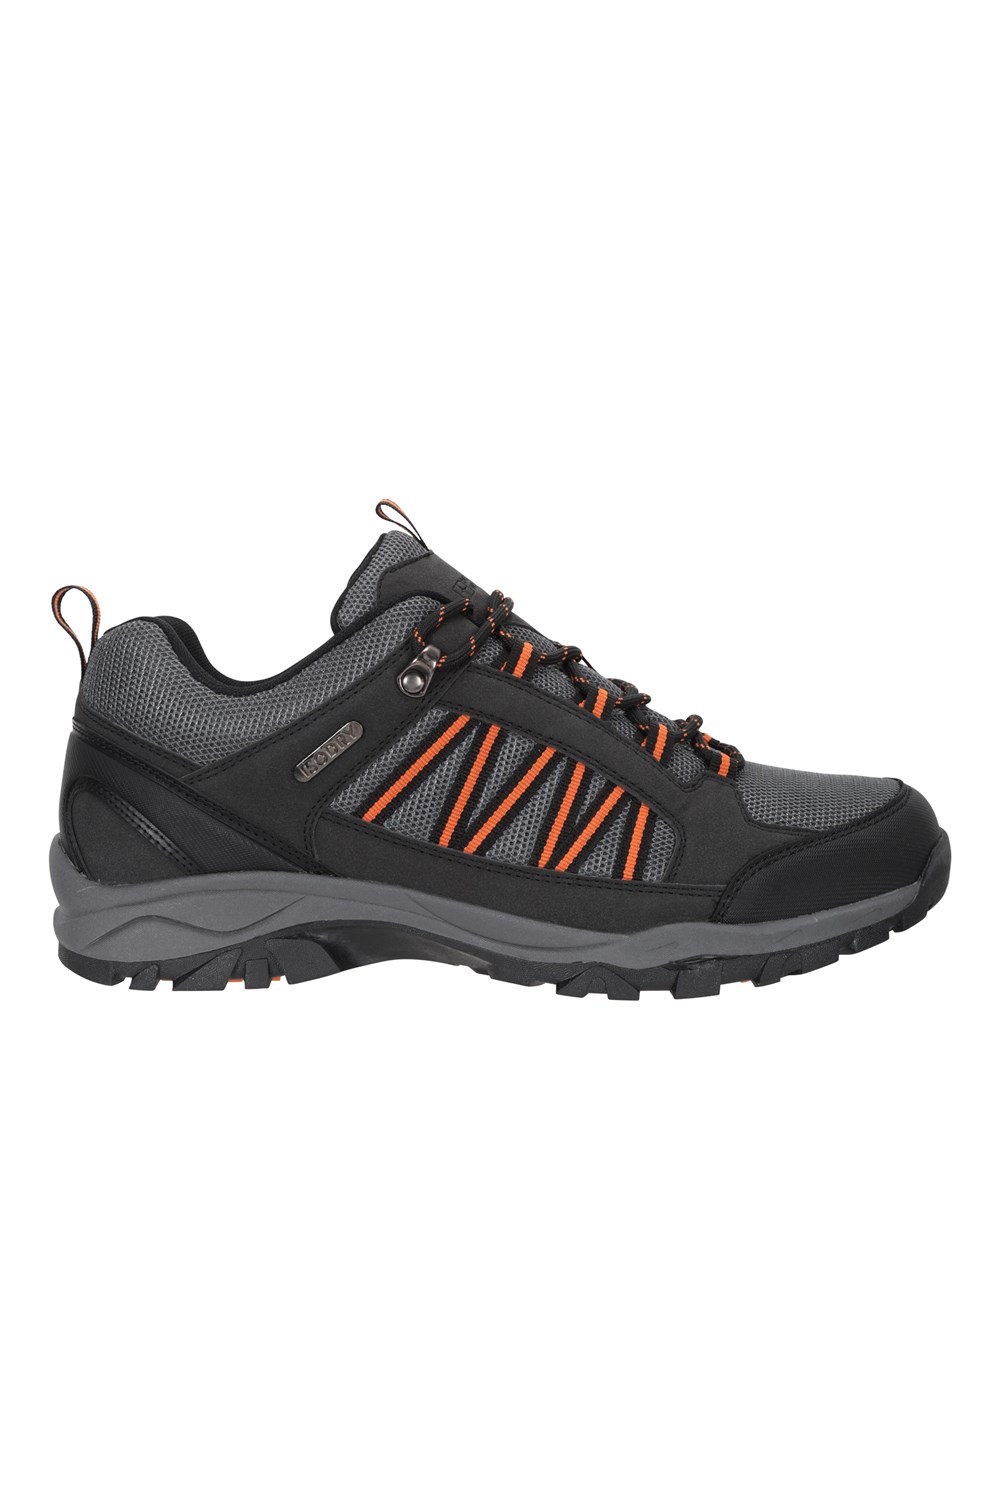 Mountain Warehouse Mens Path Waterproof Walking Shoes Breathable Hiking ...